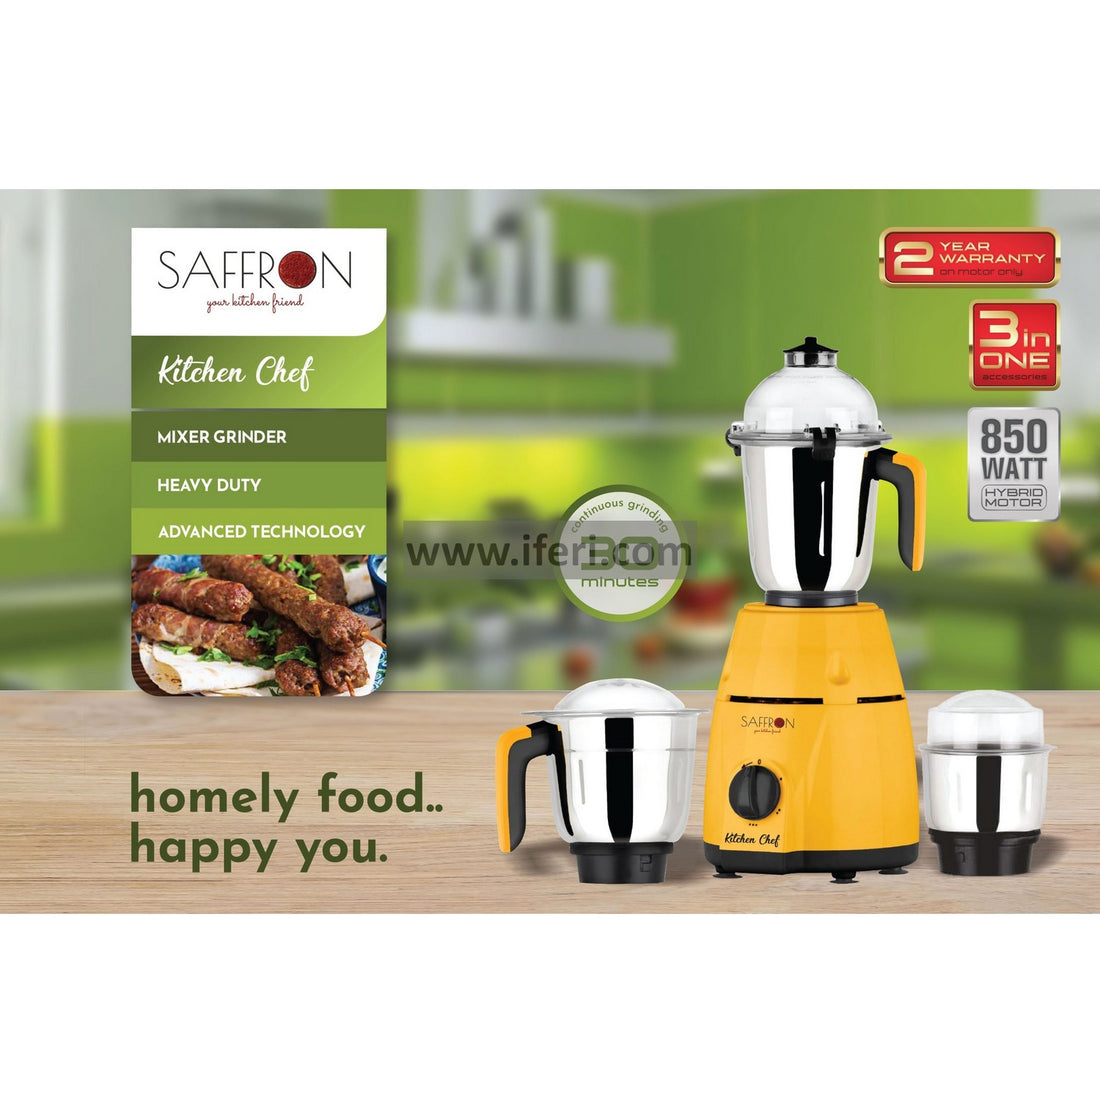 Buy Saffron Mixer Grinder Blender through online from iferi.com